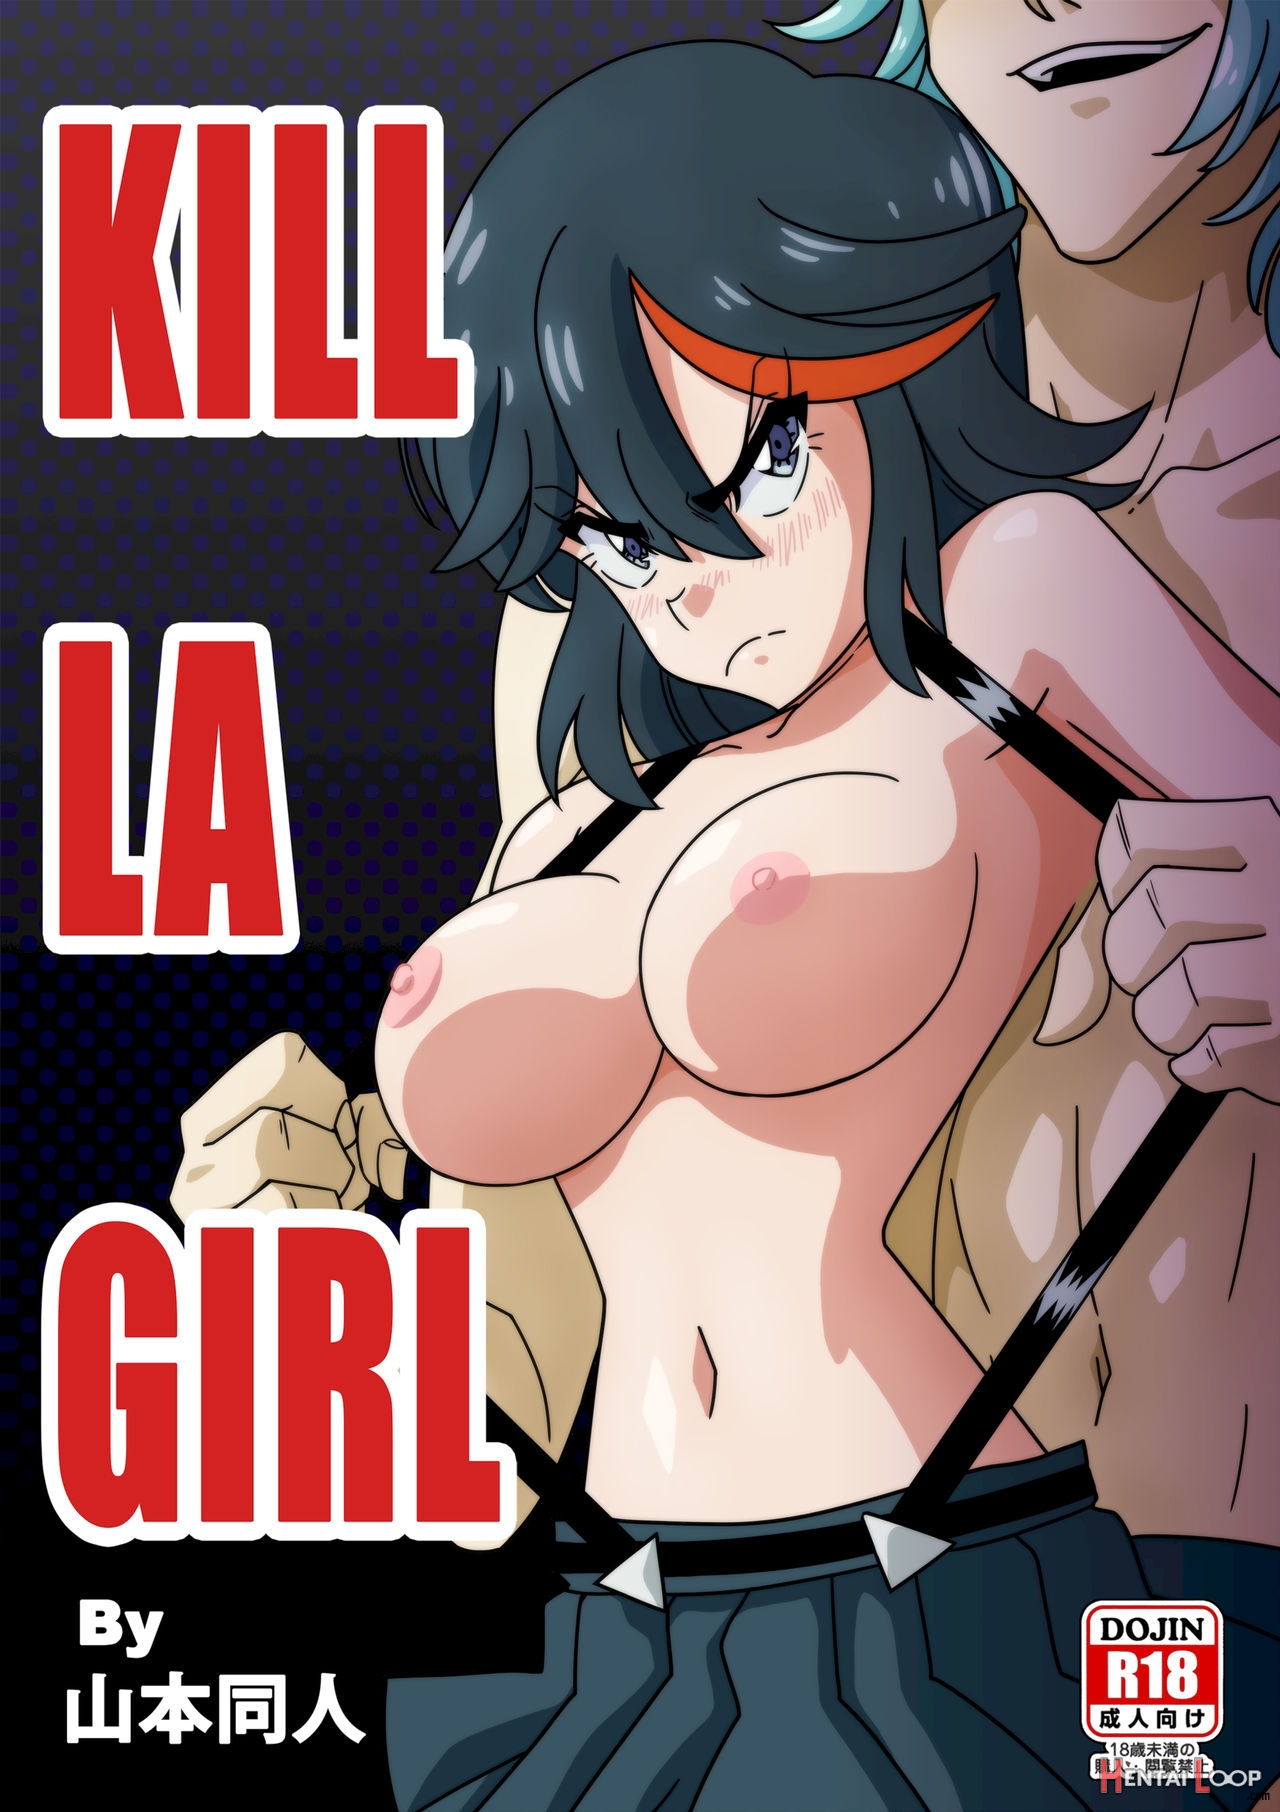 Kill La Girl page 1